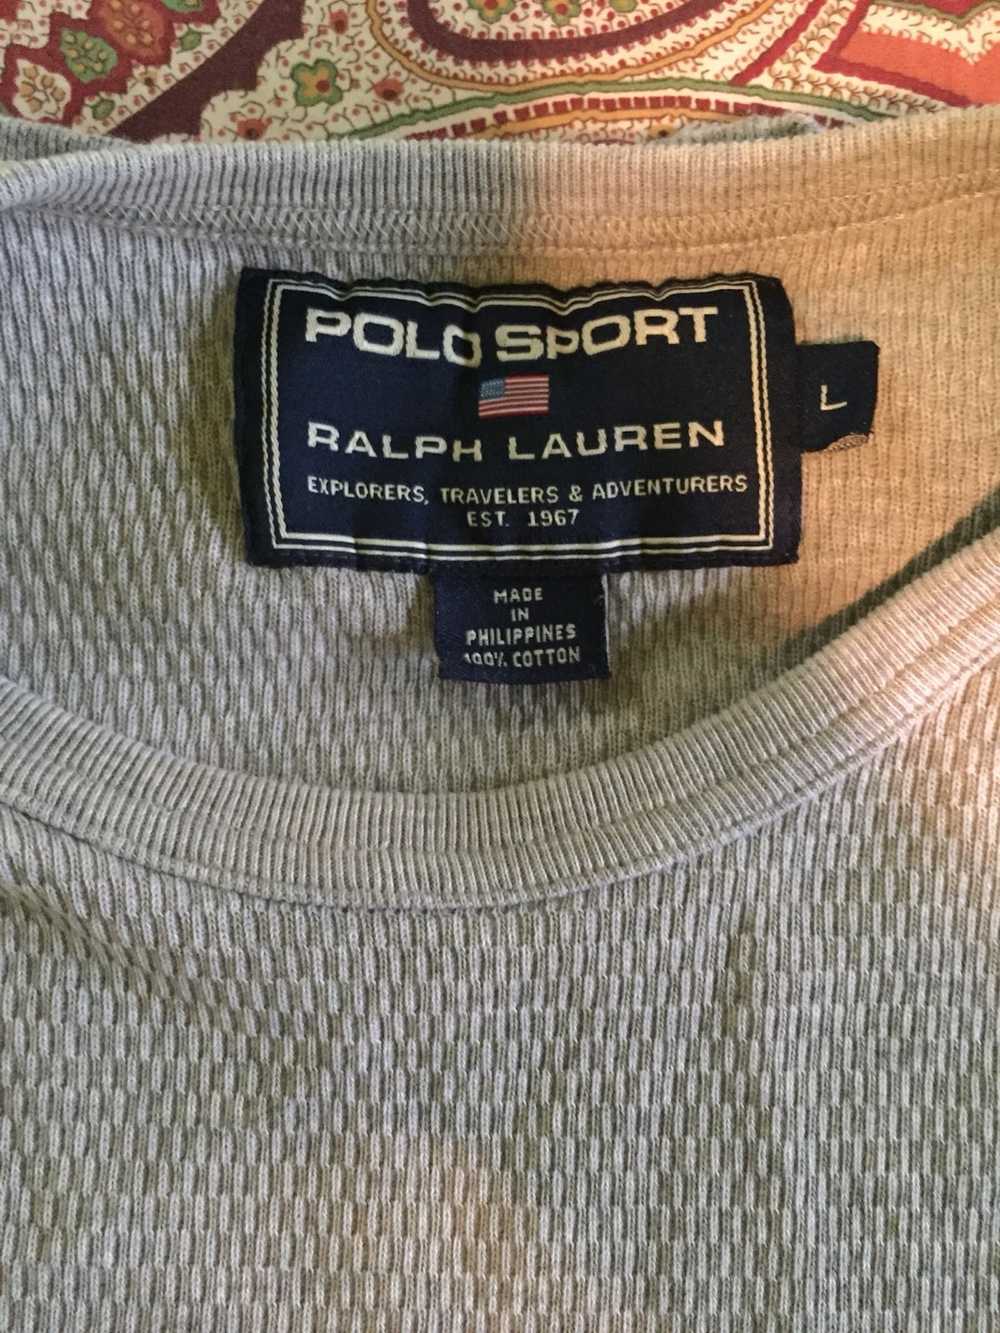 Polo Ralph Lauren Polo sport long sleeve - image 3